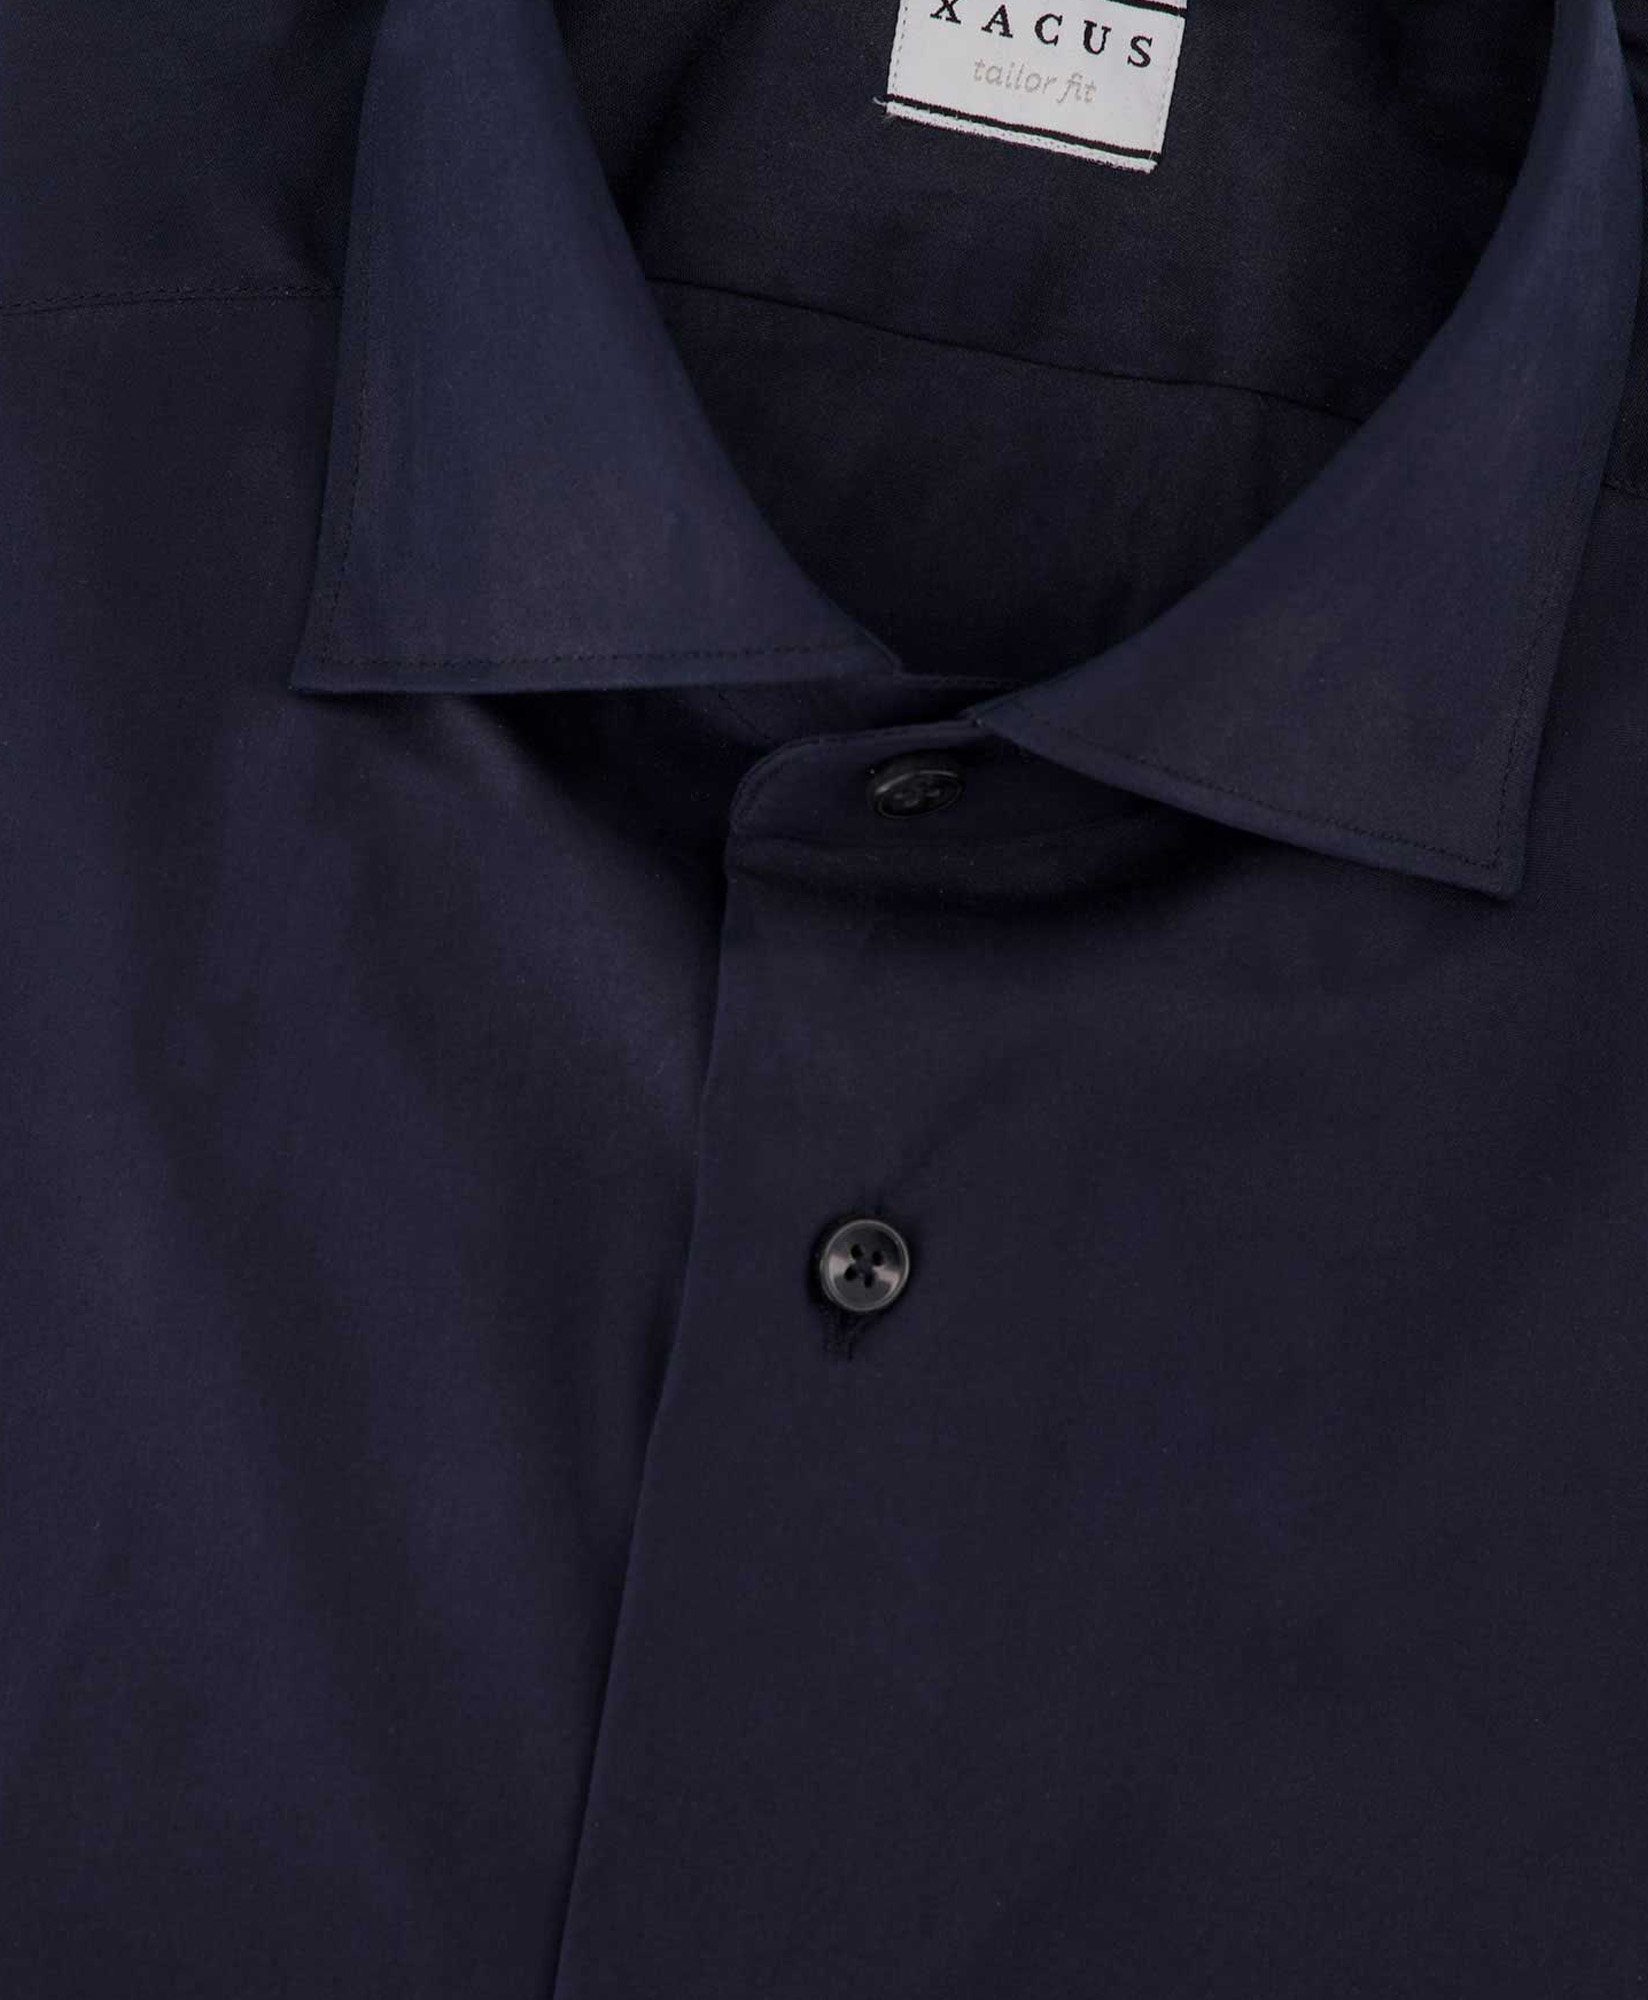 Xacus Overhemd 16125/558 Tailor Donker Blauw